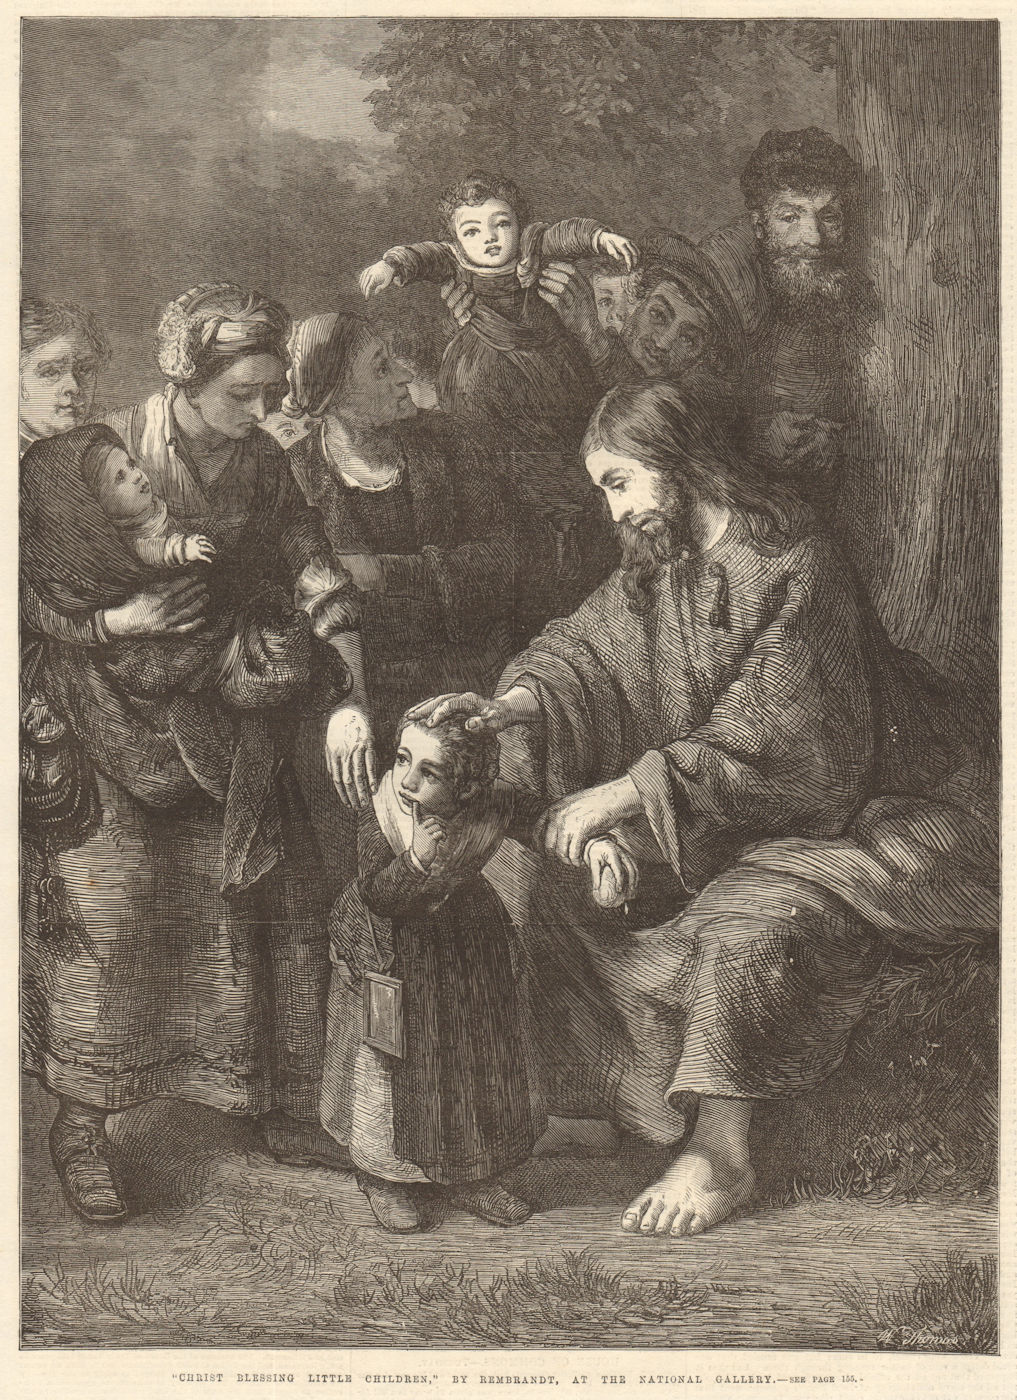 Associate Product "Christ blessing little children" by Rembrandt. Bible. Fine Arts 1867 print